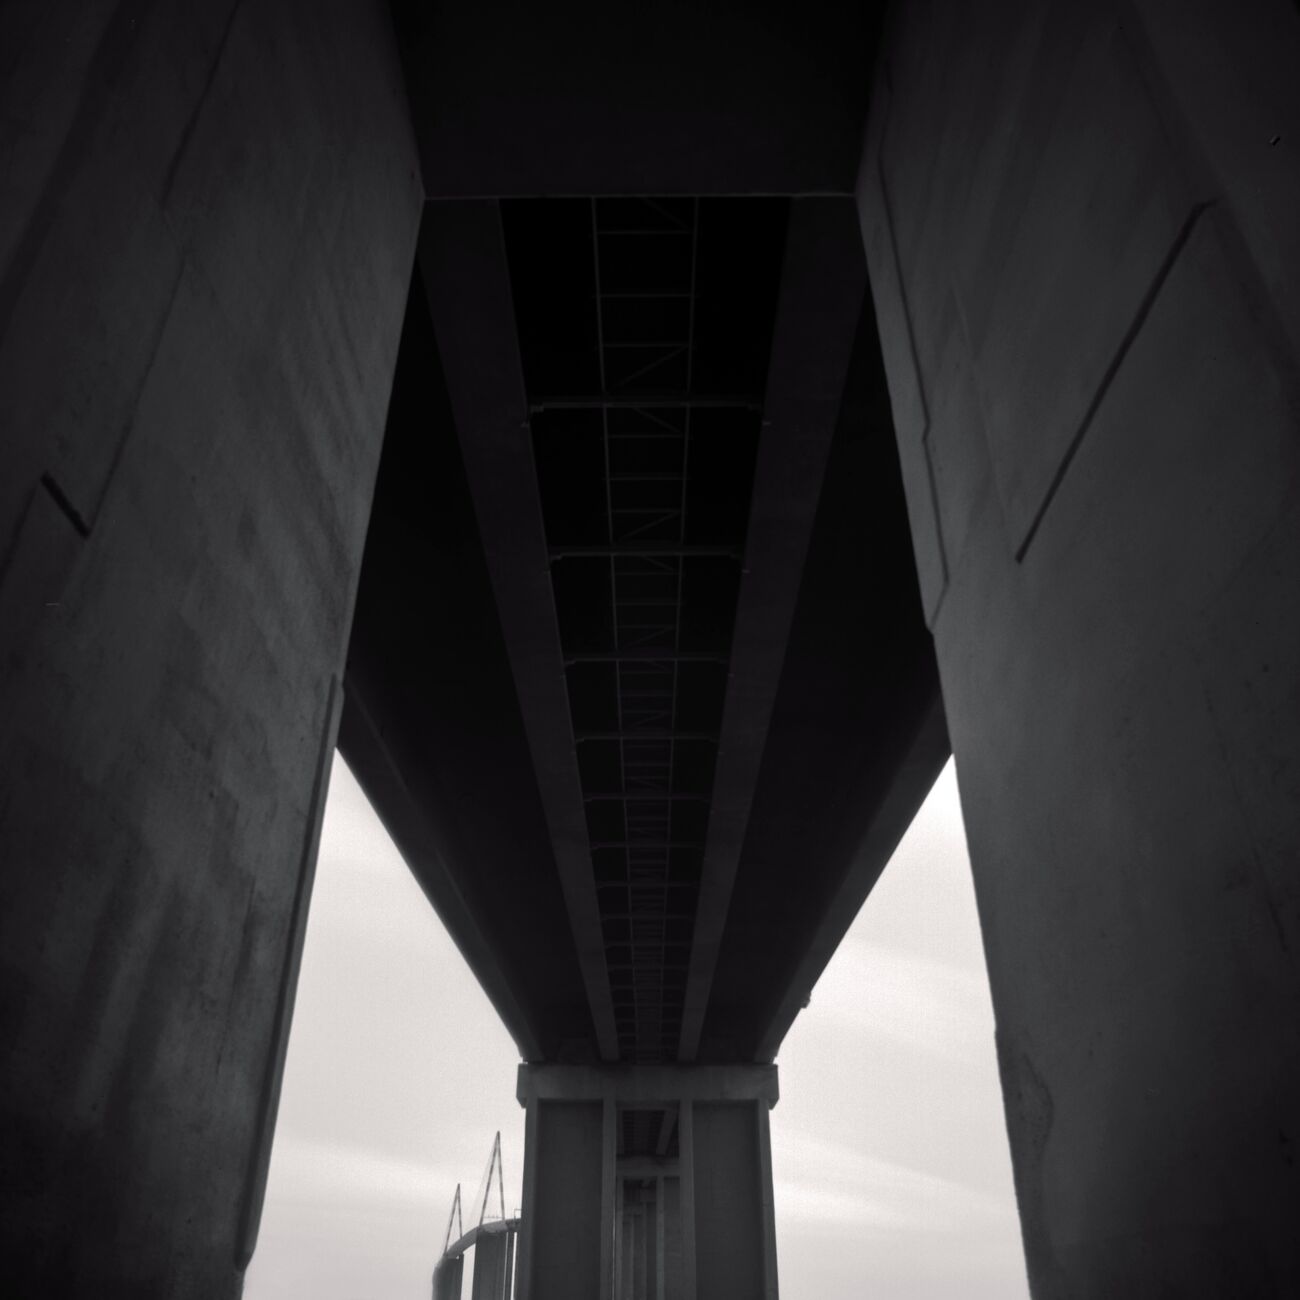 Saint-Nazaire Bridge, Etude 2, Trignac, France. February 2021. Ref-11455 - Denis Olivier Photography